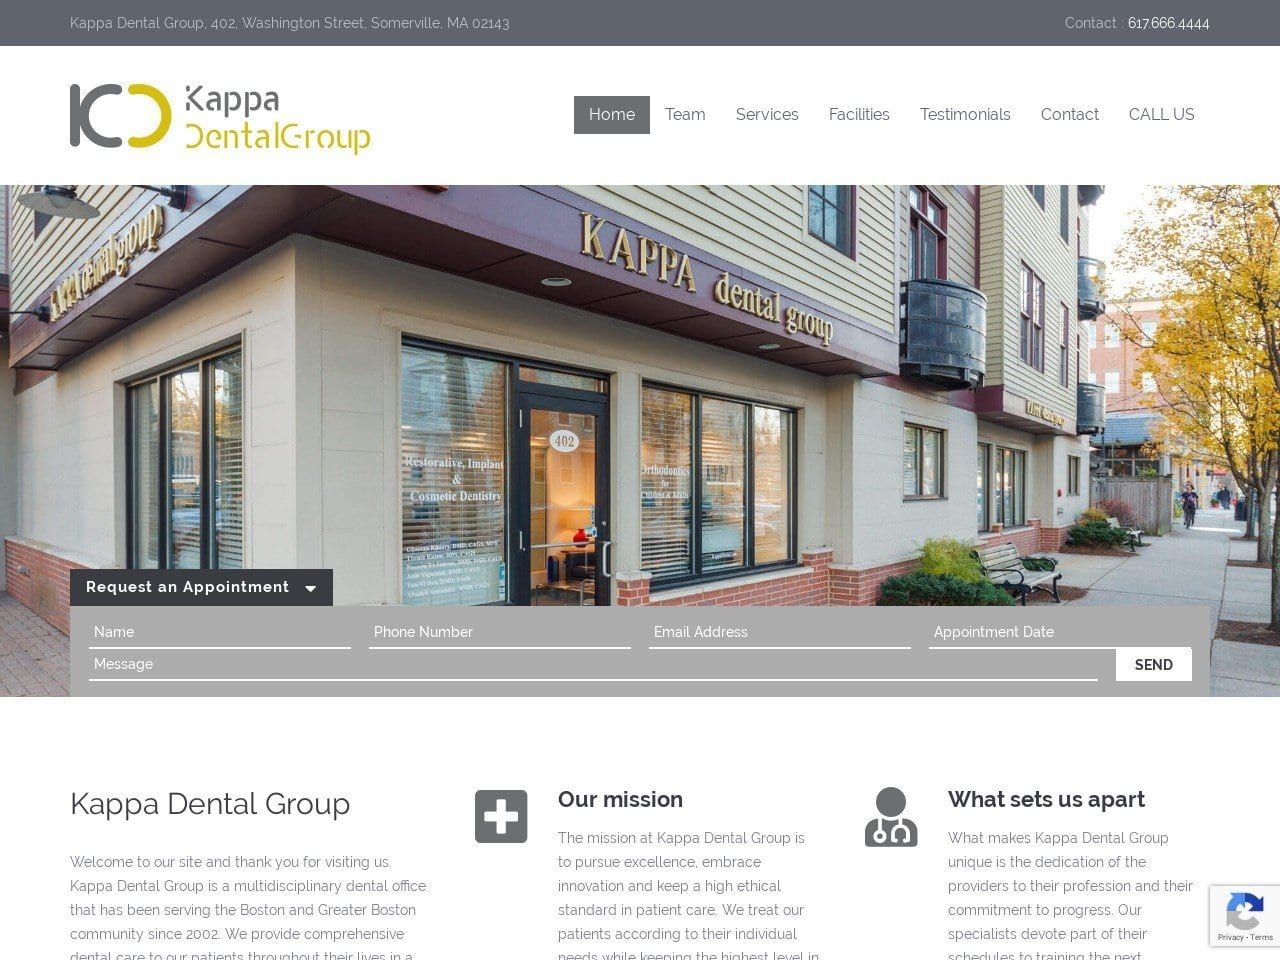 Kappa Dental Group Website Screenshot from kappadental.com